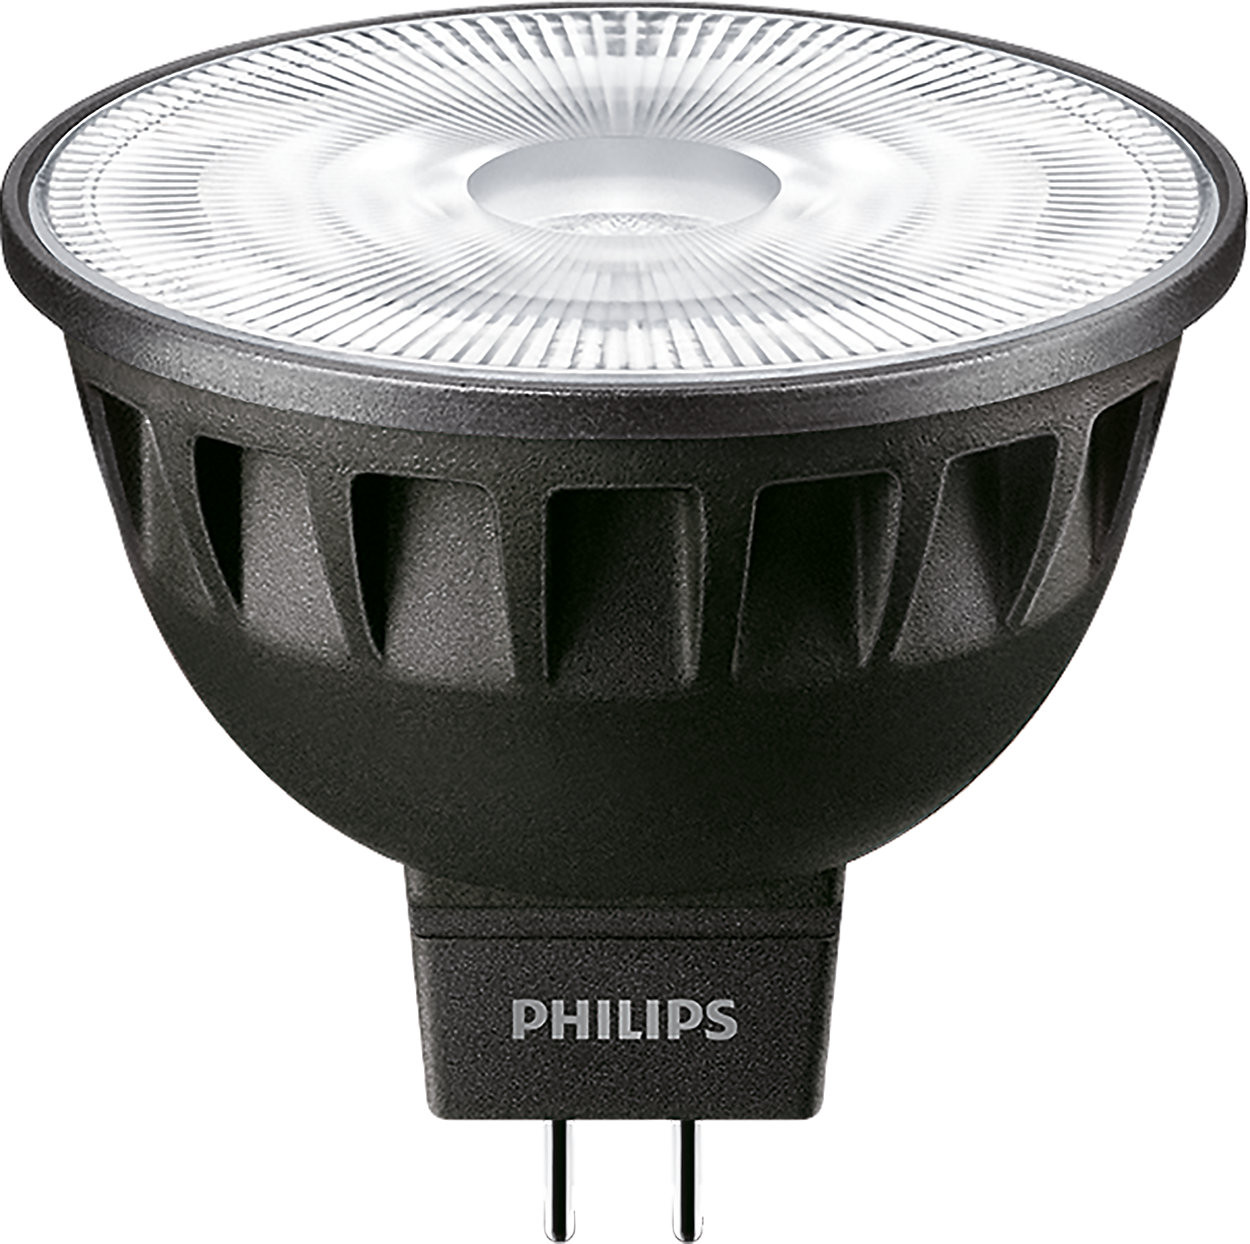 Philips Master LED ExpertColor D 6.5-35W MR16 940 36D